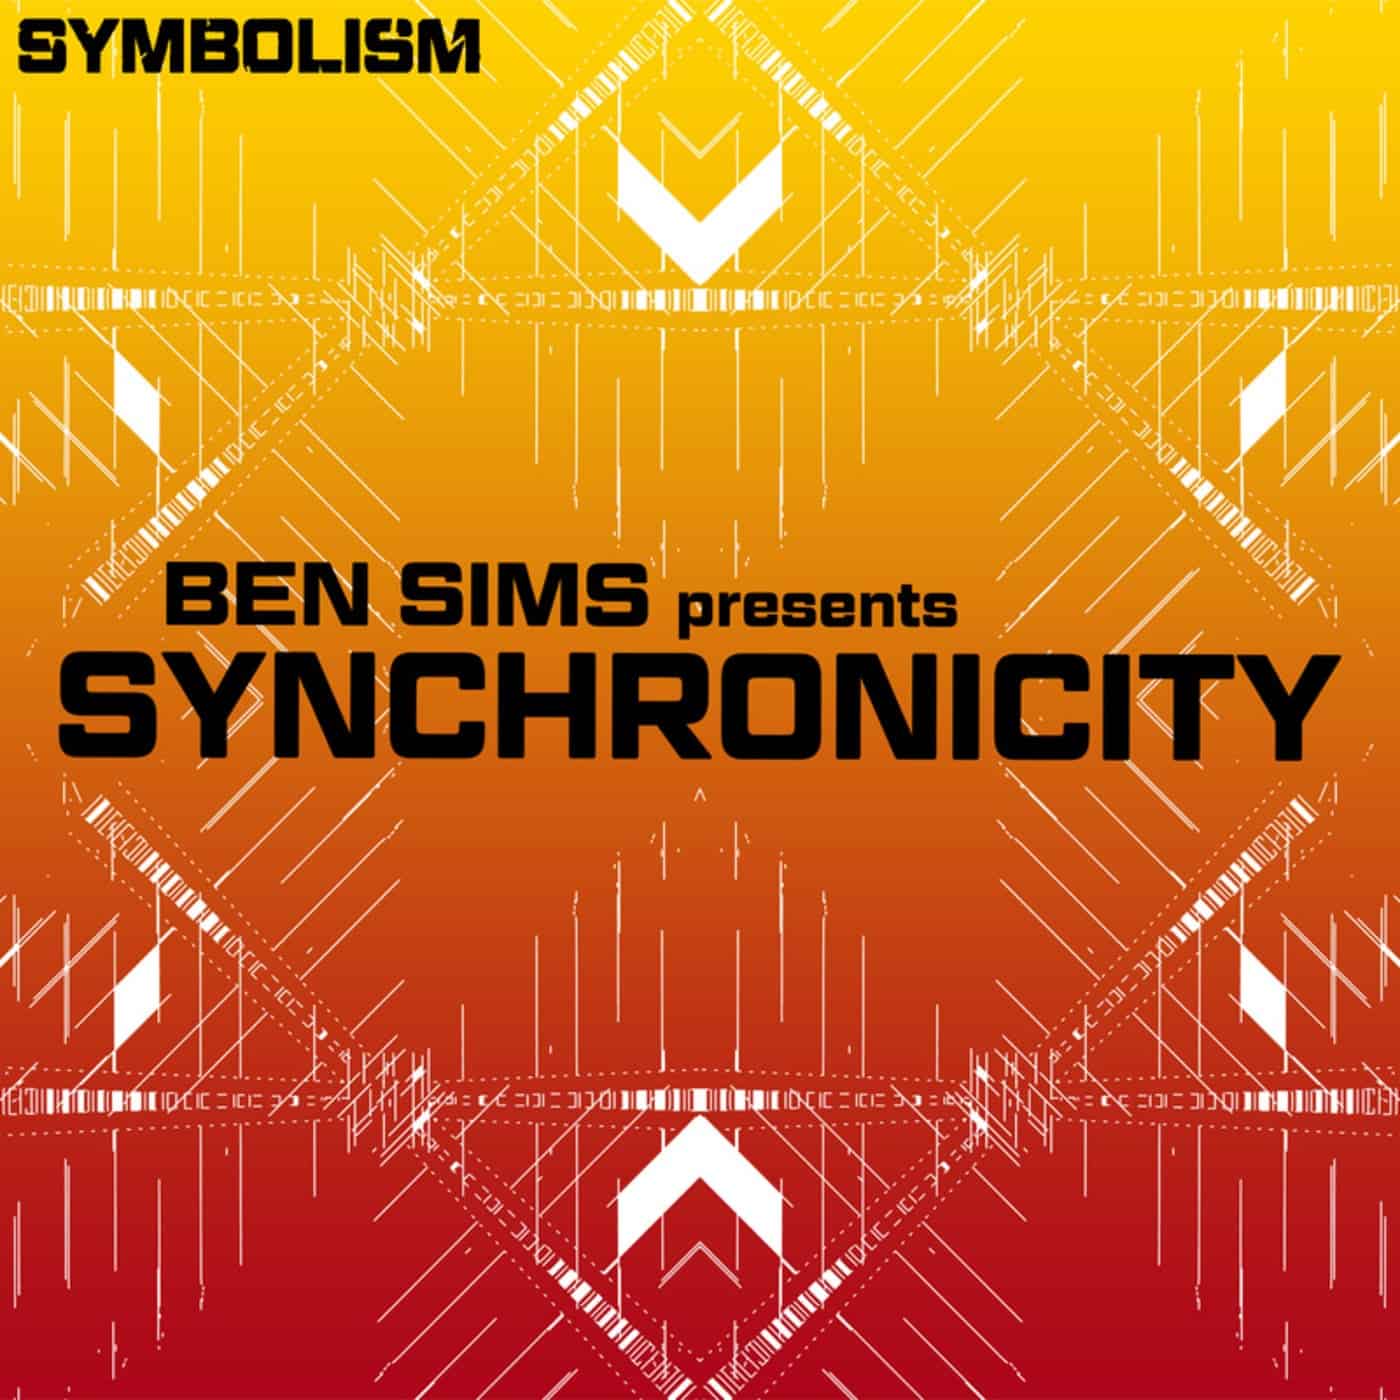 image cover: VA - Ben Sims presents Synchronicity / SYMDIGICOMP003